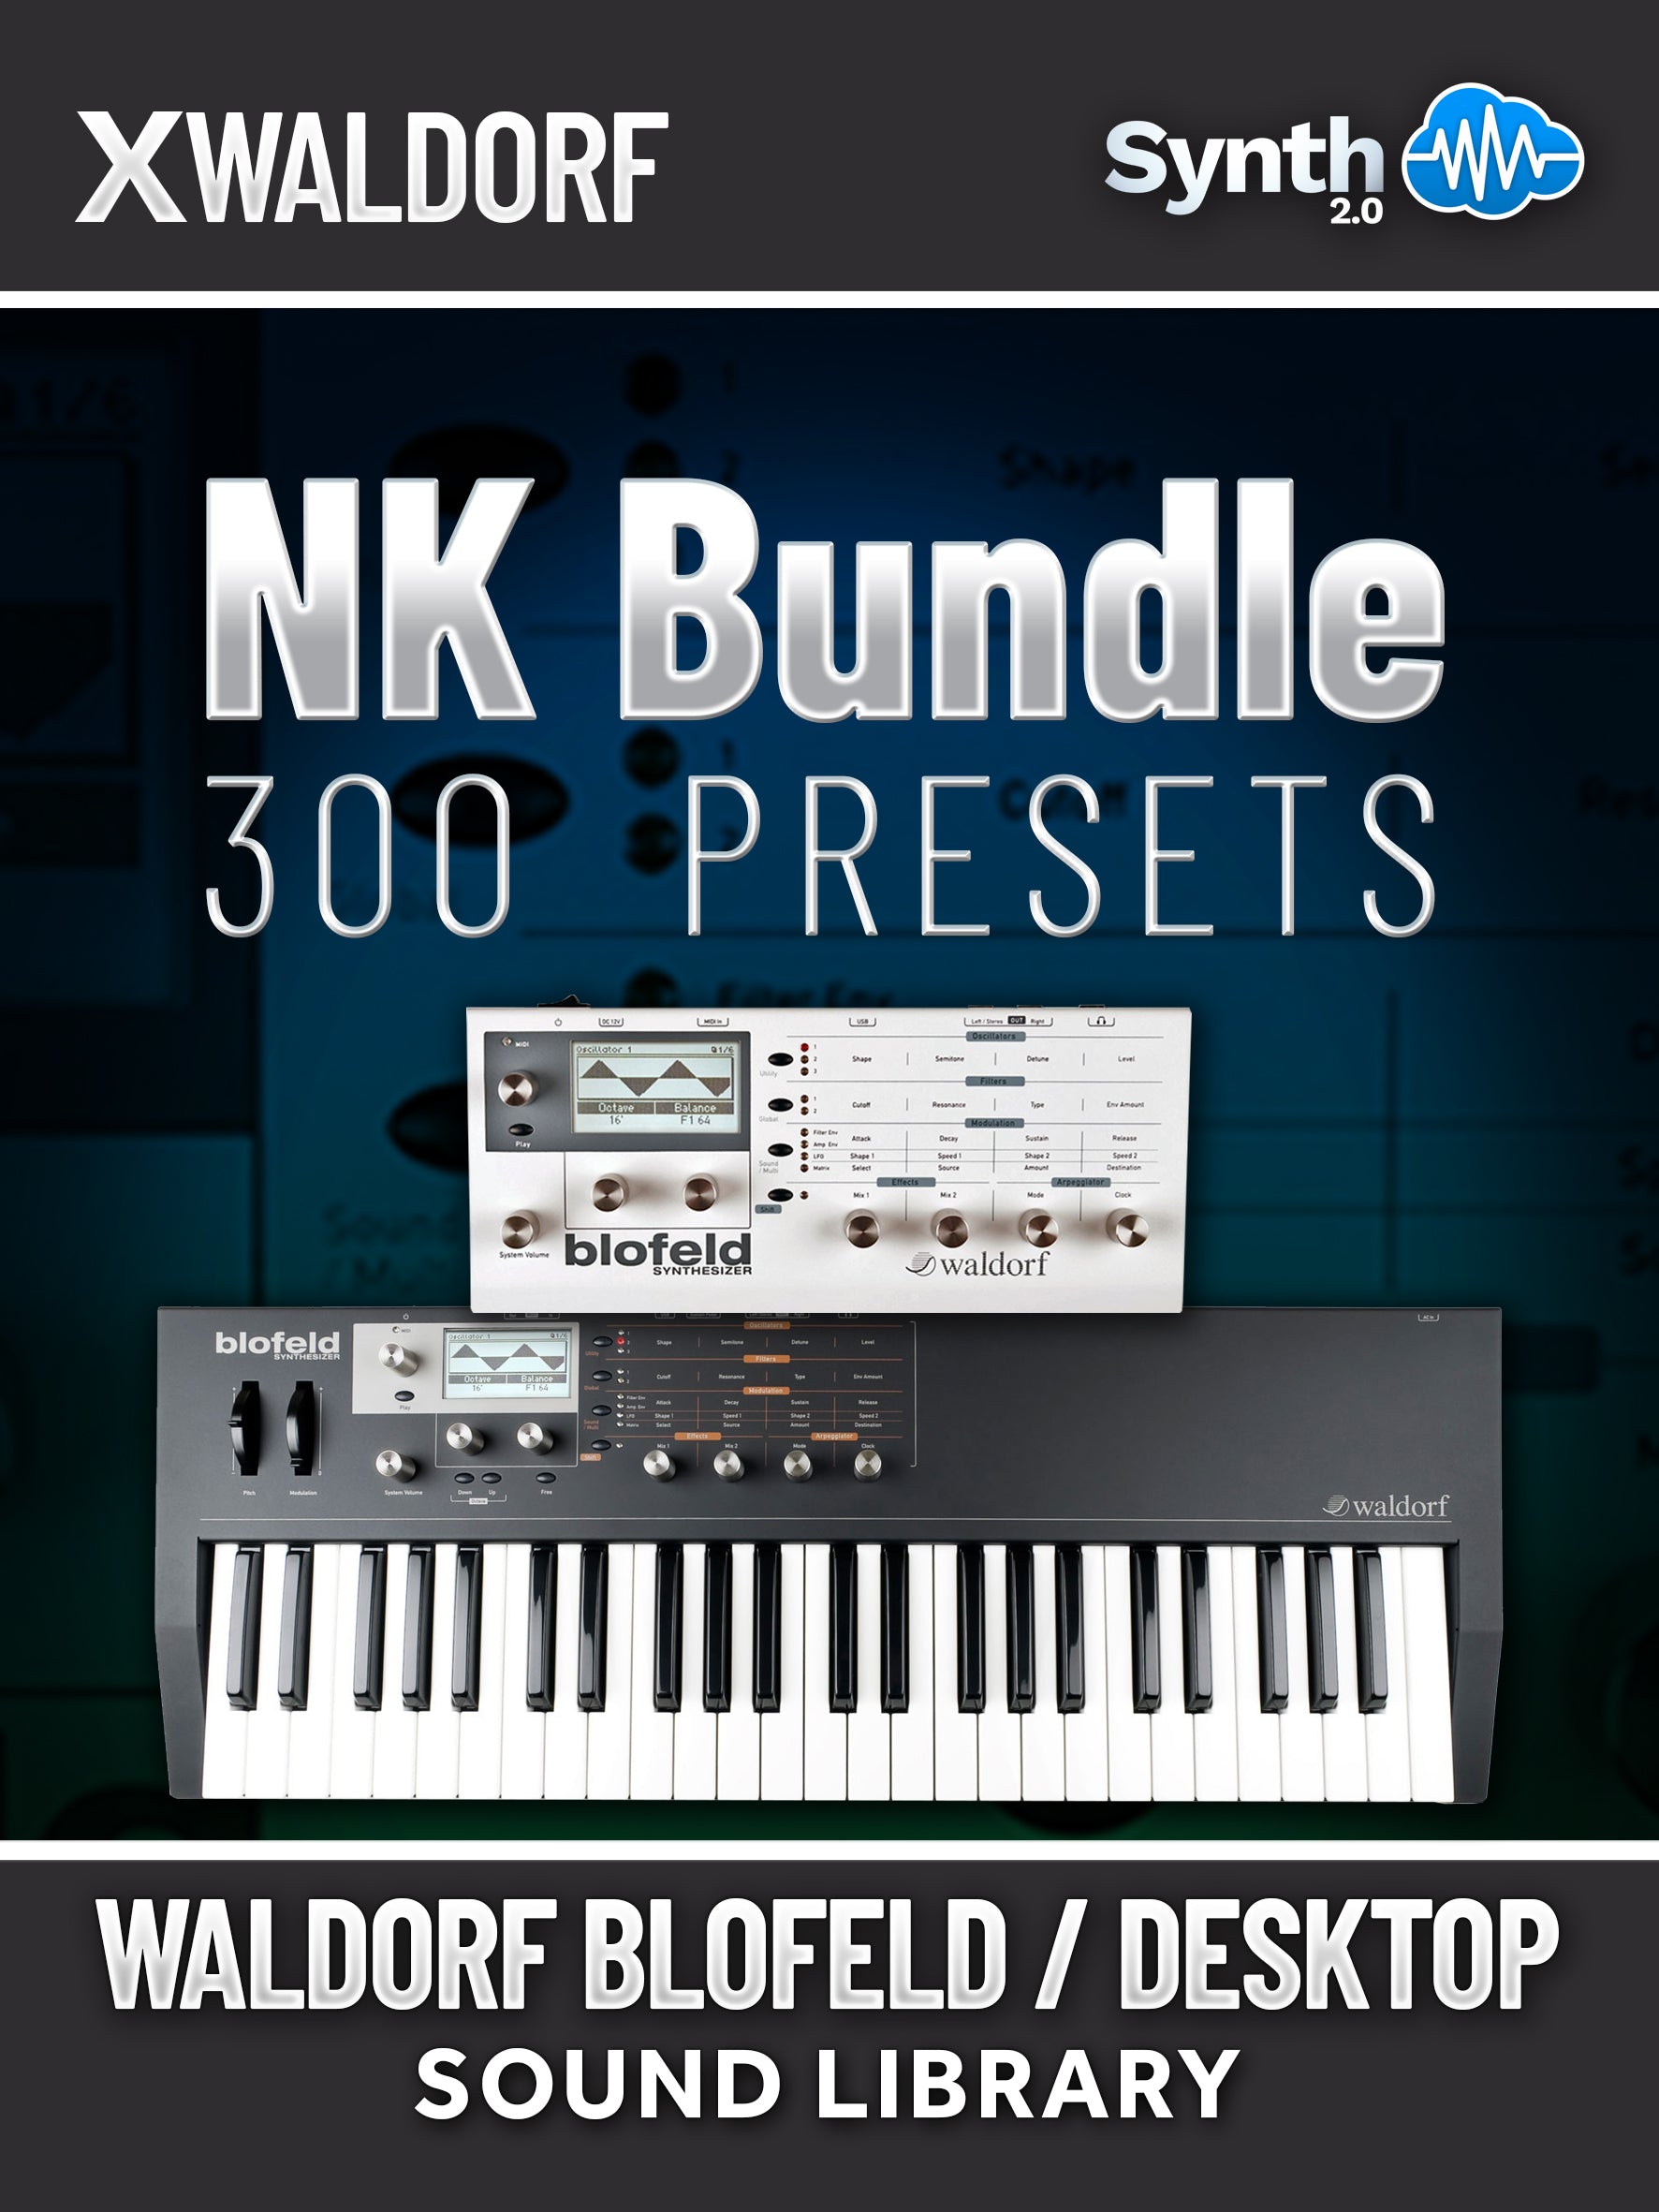 NK Bundle Waldorf Blofeld 300 presets – Synthcloud